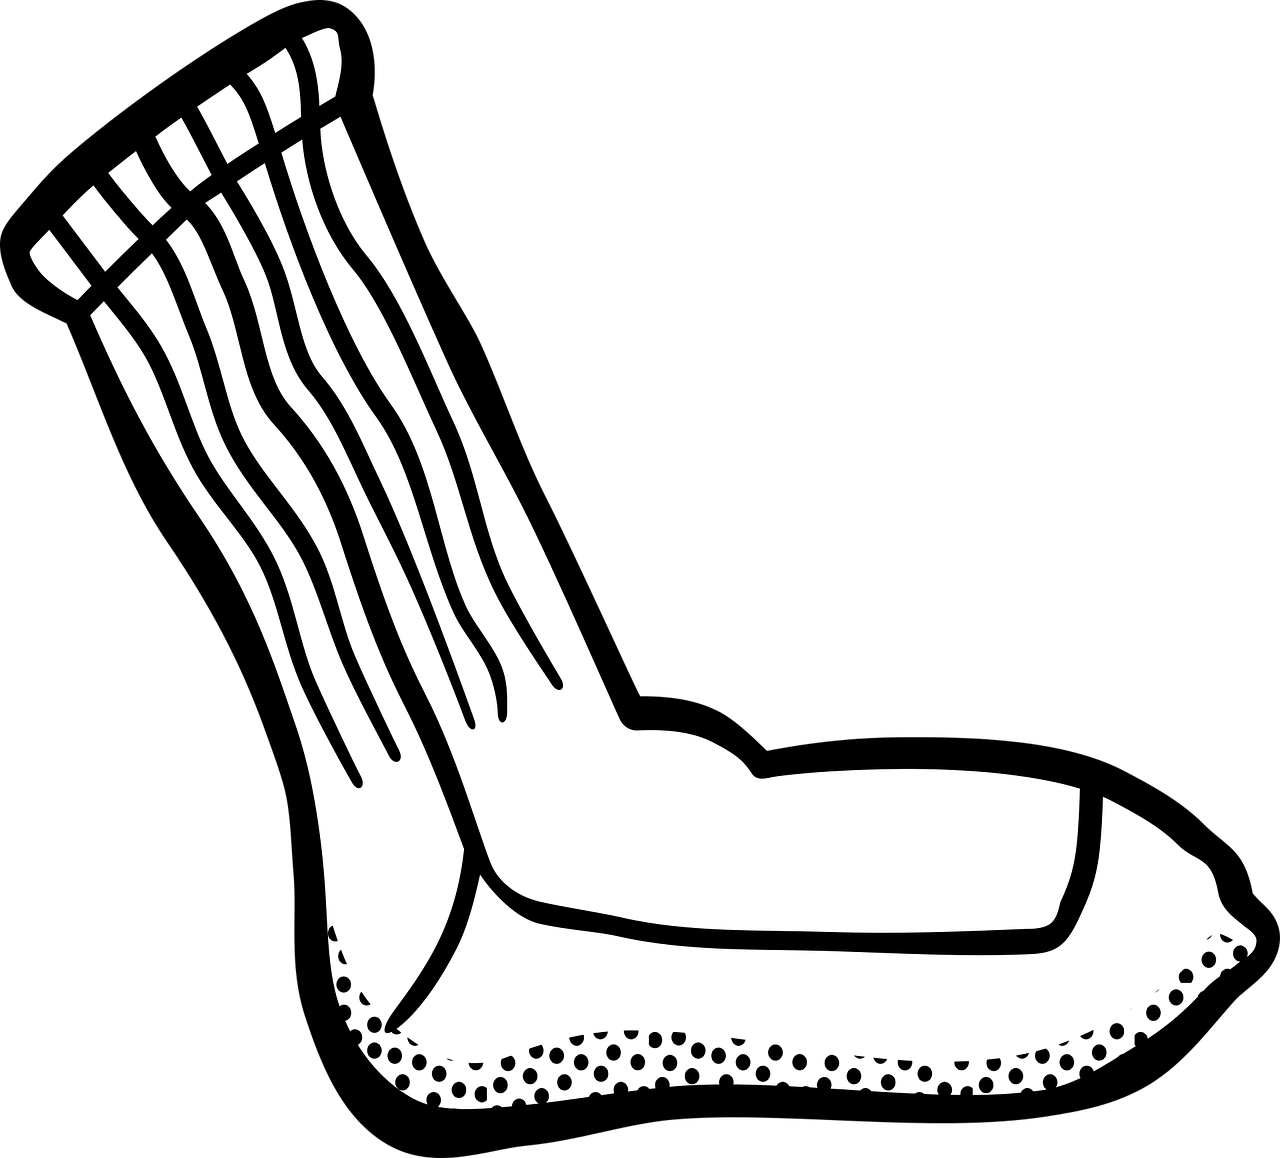 a pair of socks on a black background, an illustration of, inspired by Juraj Julije Klović, trending on pixabay, digital art, black and white vector, white loincloth, inky illustration, gills